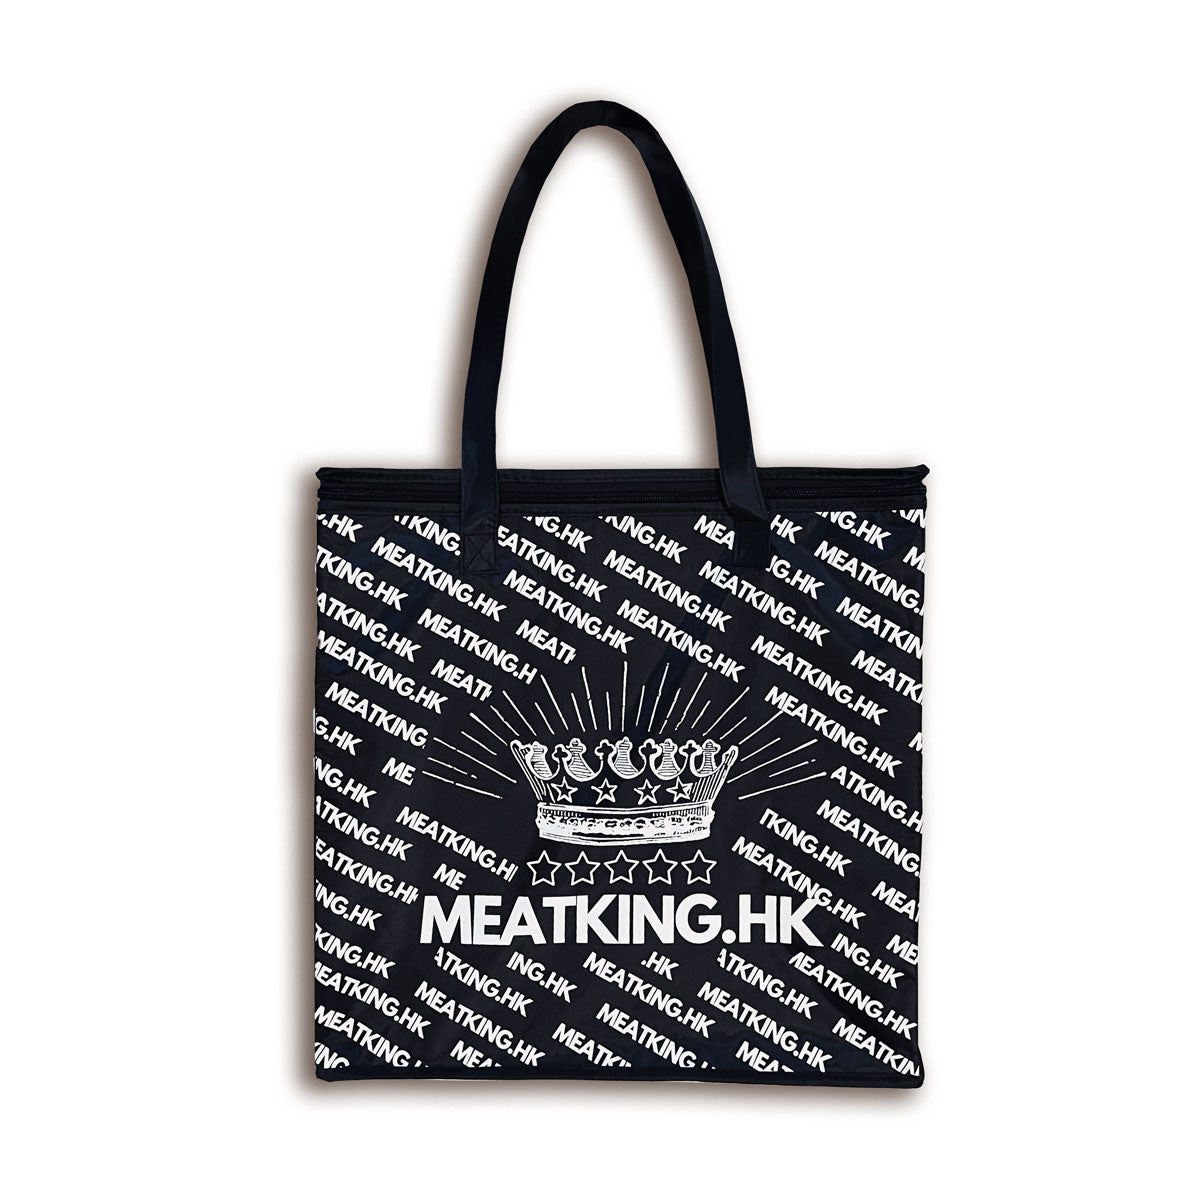 Meat King Cooler Bag for fresh meat transportation from MeatKing.hk